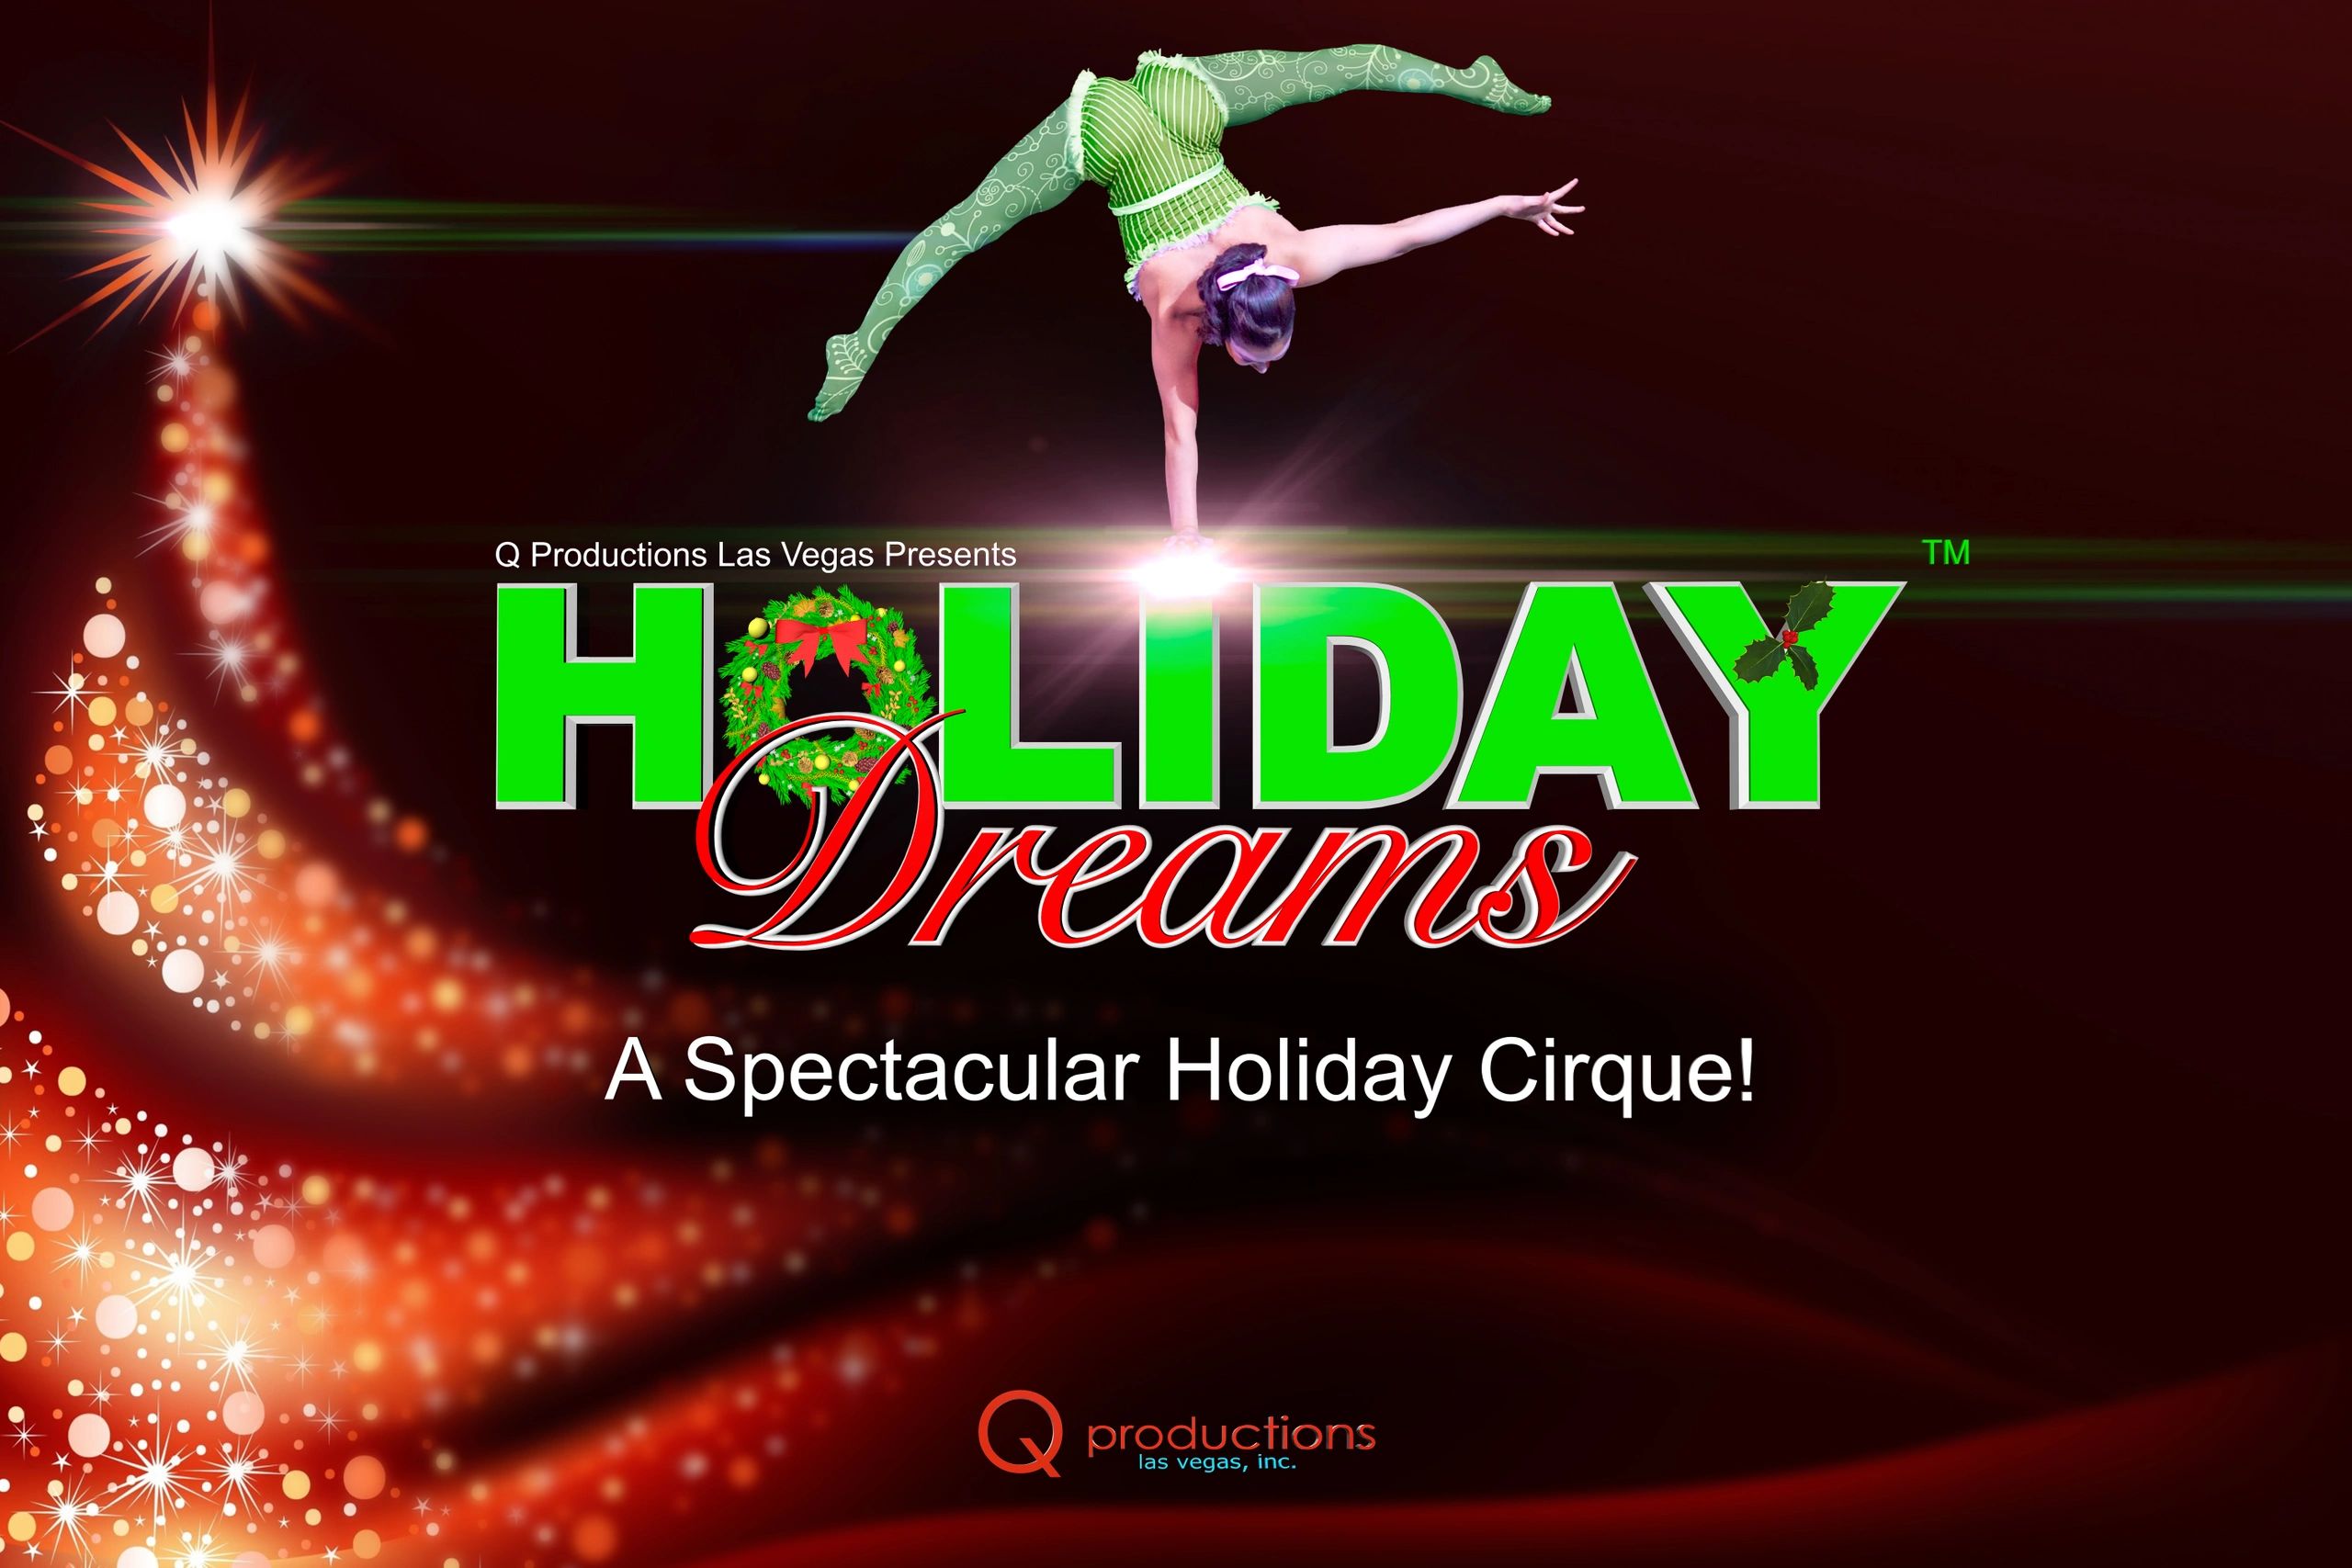 FAQs Holiday Dreams, A Spectacular Holiday Cirque!